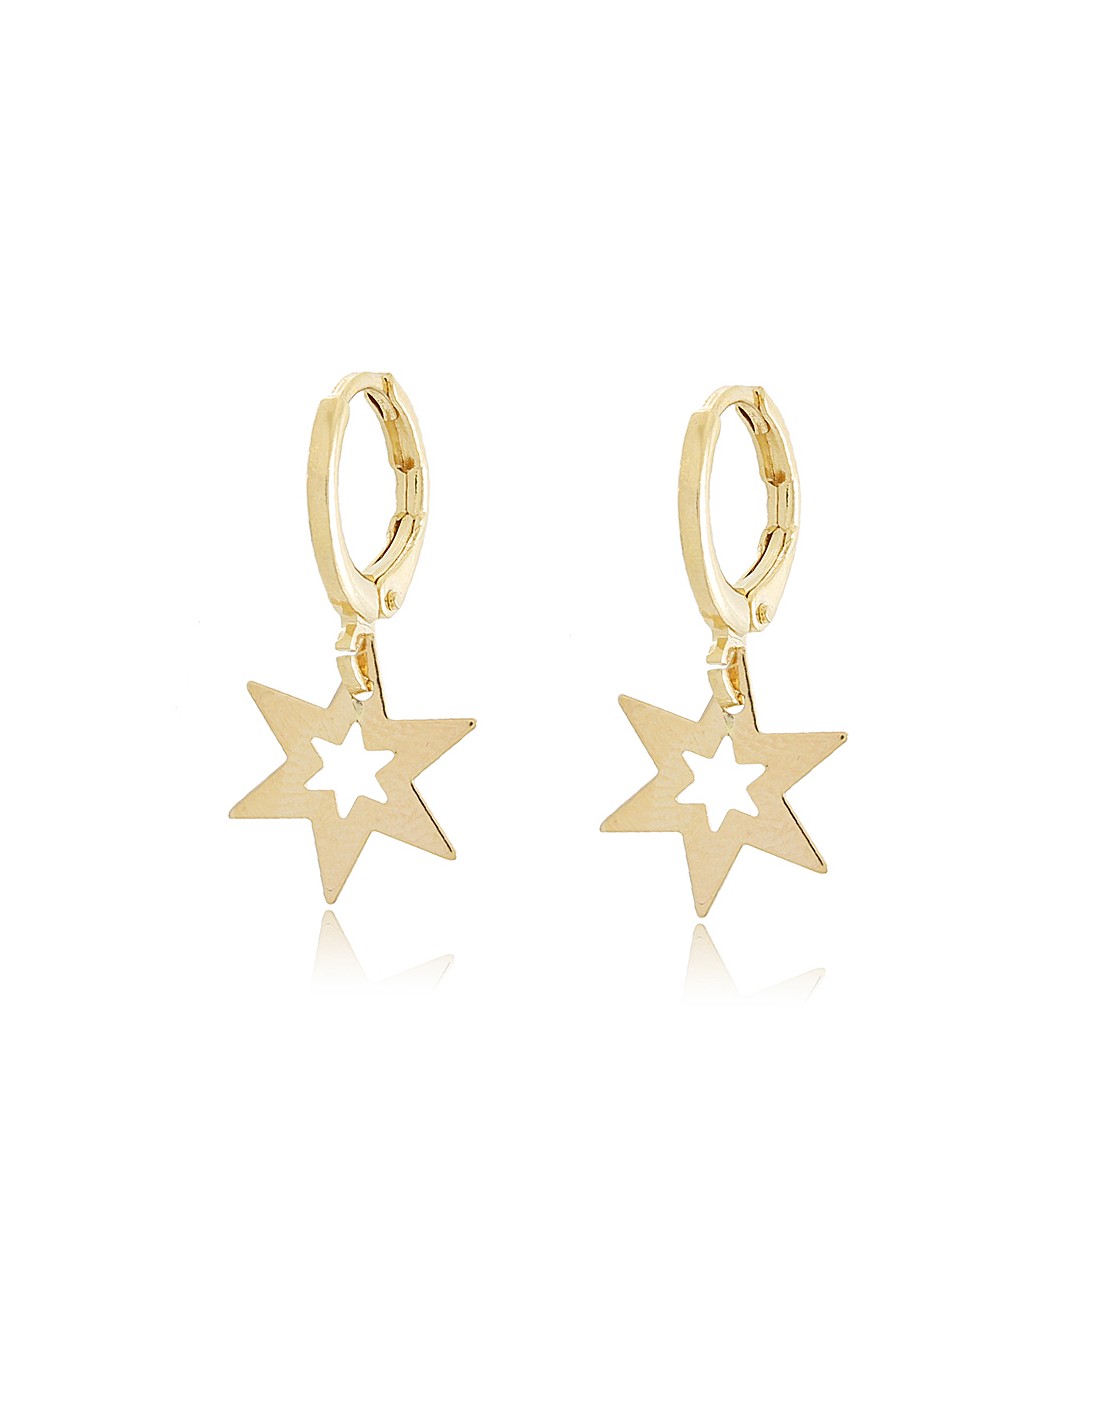 18k gold plated charm hoop earrings, dangling star charm.